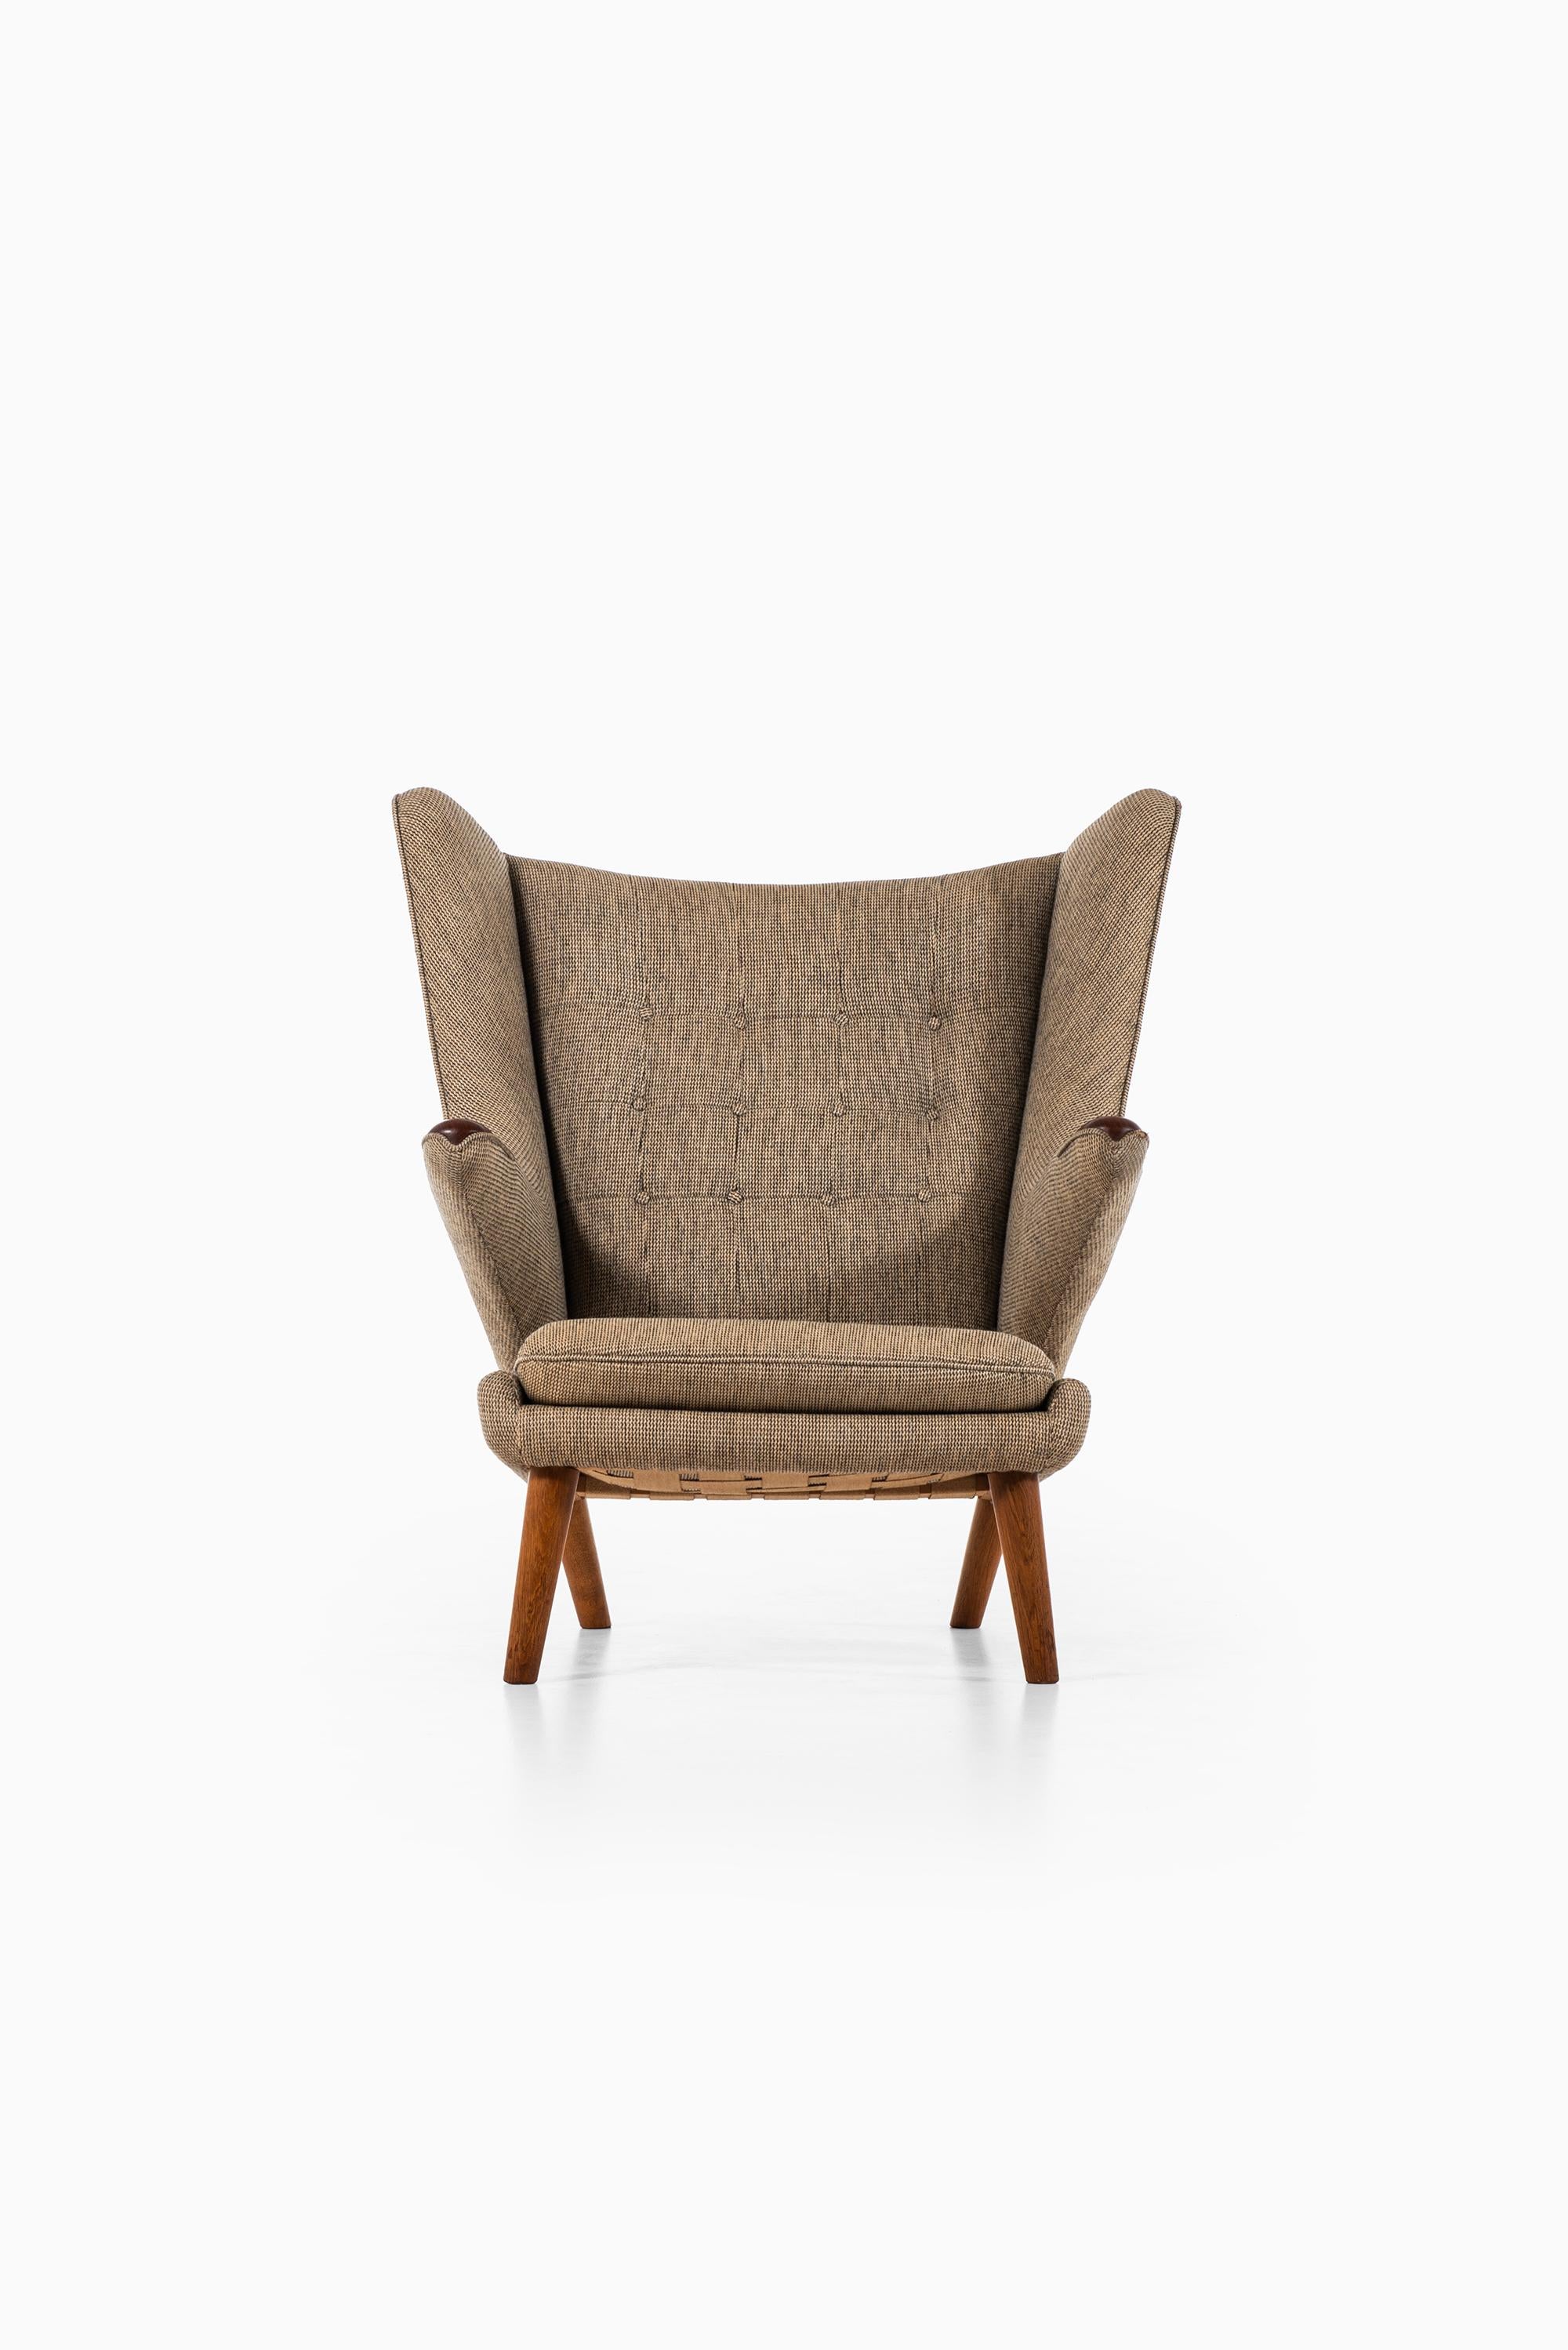 Rare easy chair model Papa bear designed by Hans Wegner. Produced by A.P. Stolen in Denmark. Teak paws, oak legs and original fabric.